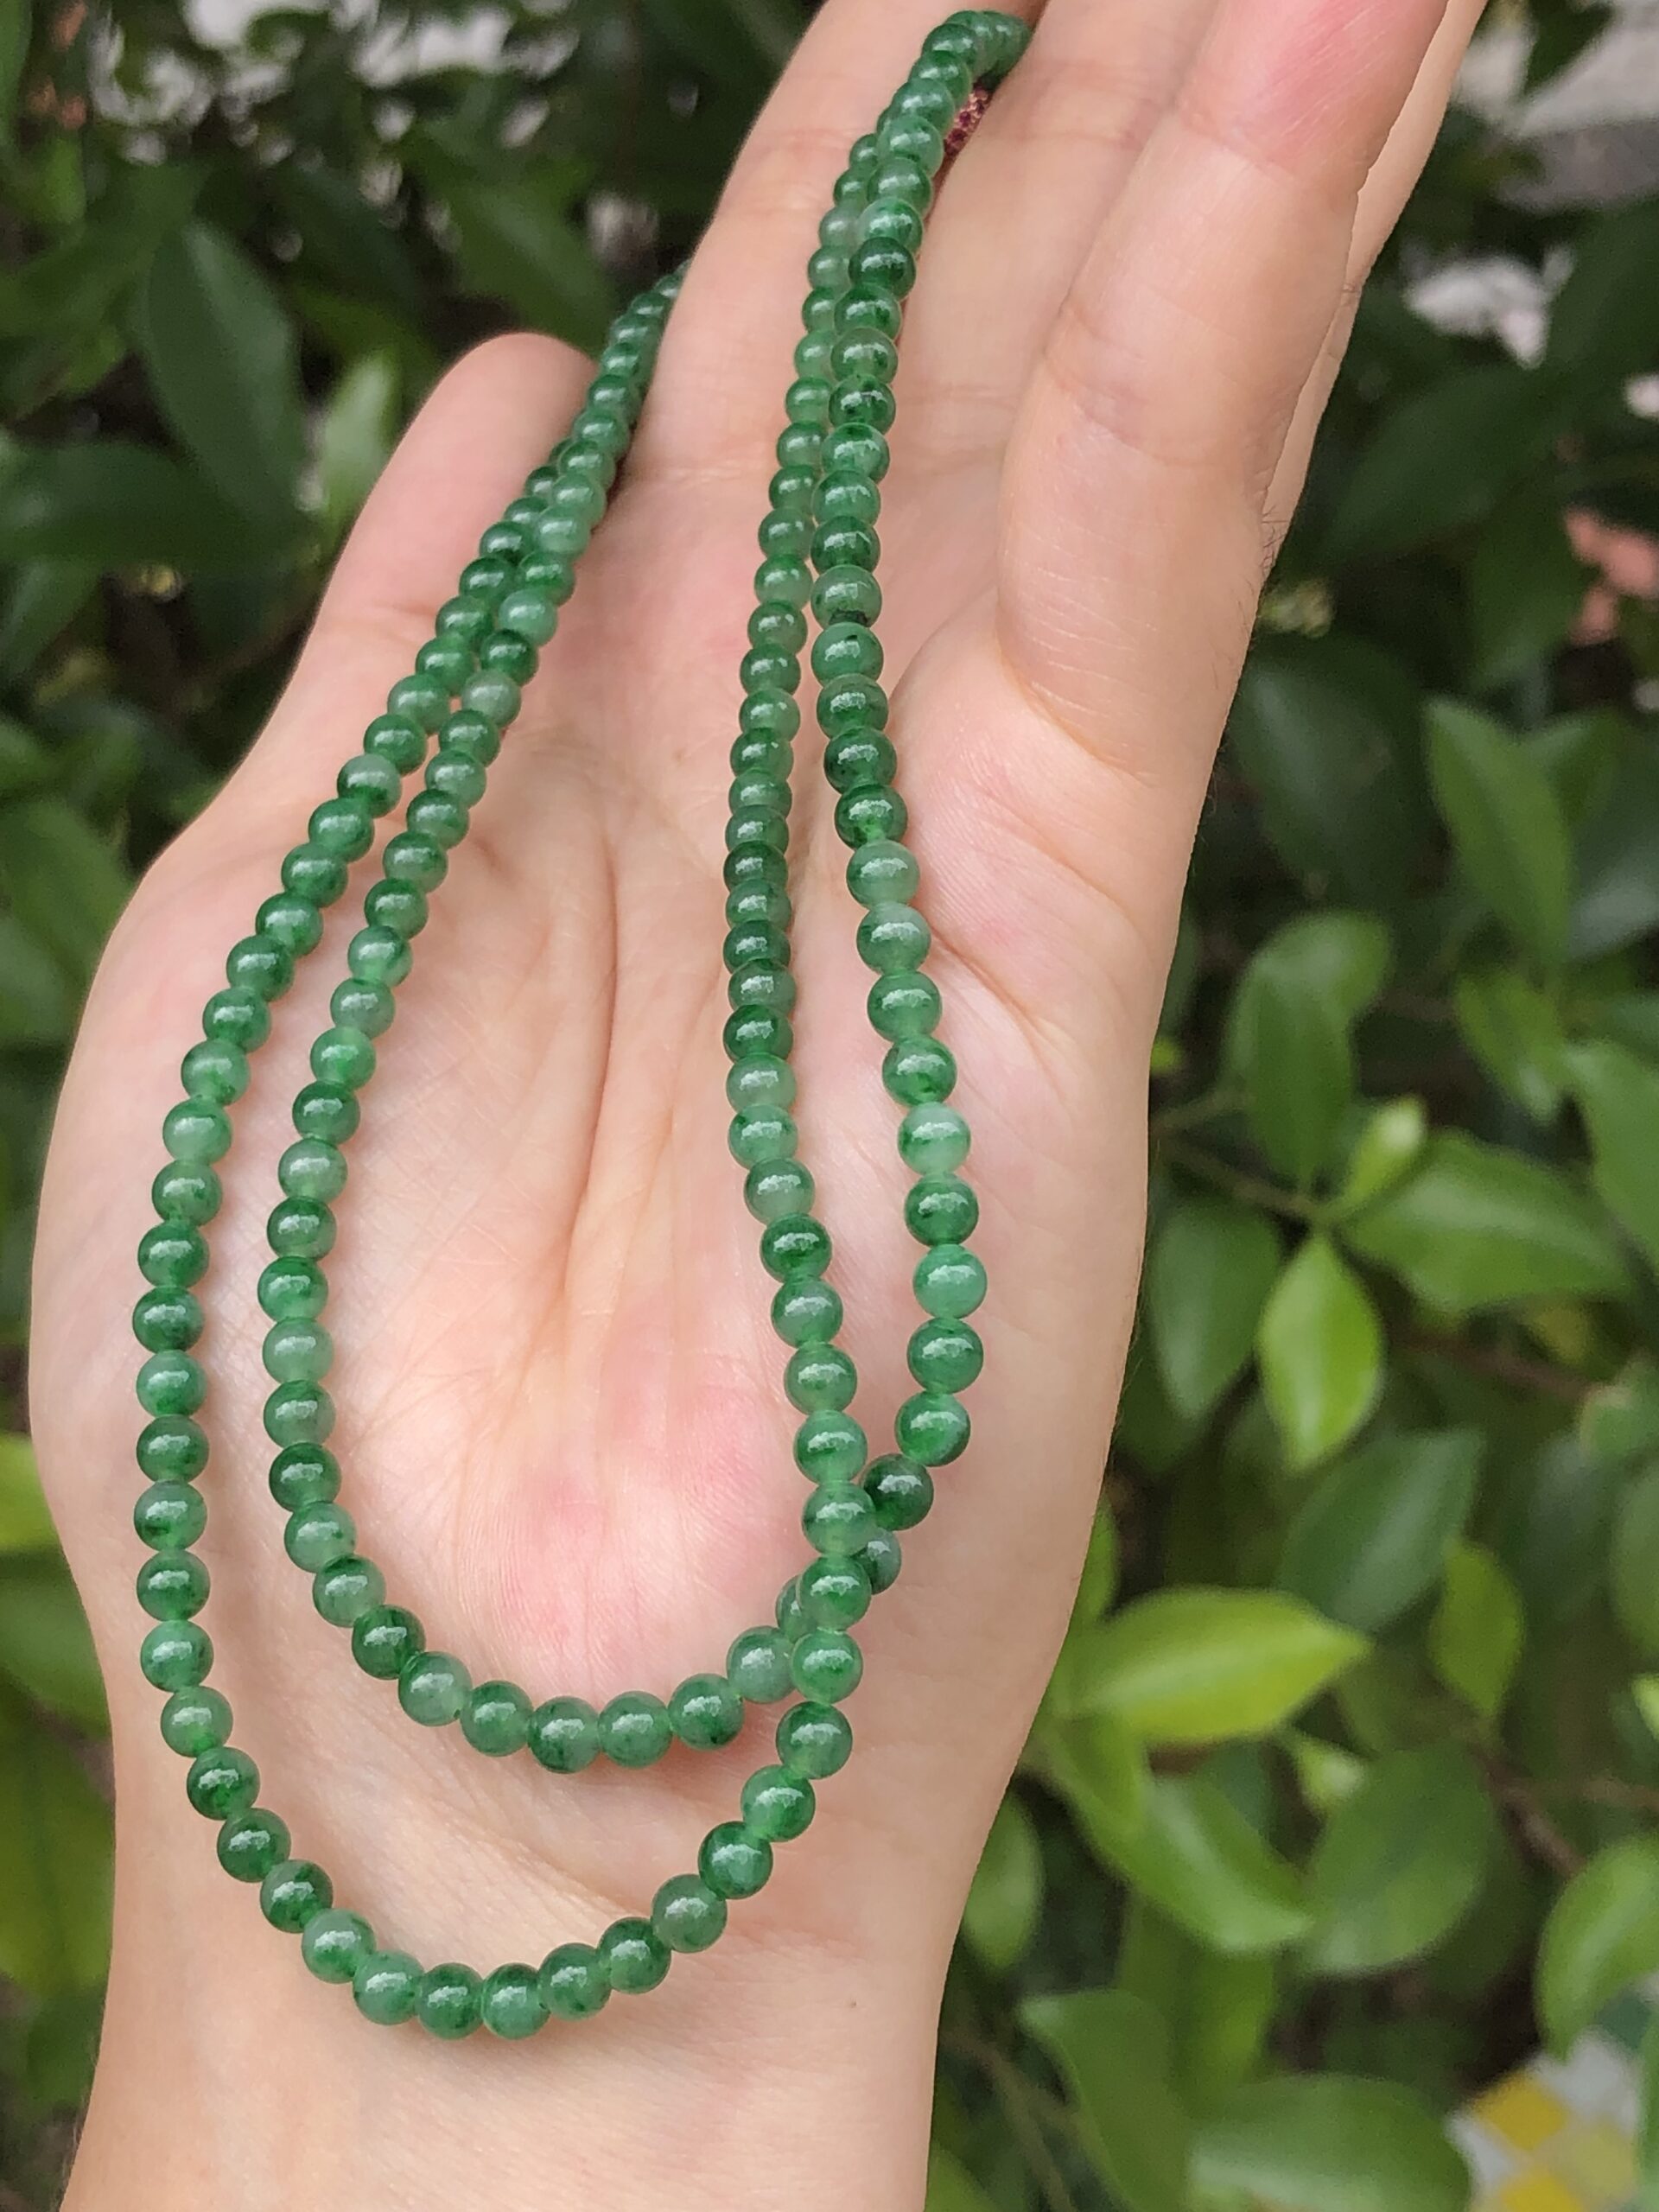 Jade Beads – Jade Mine Canada